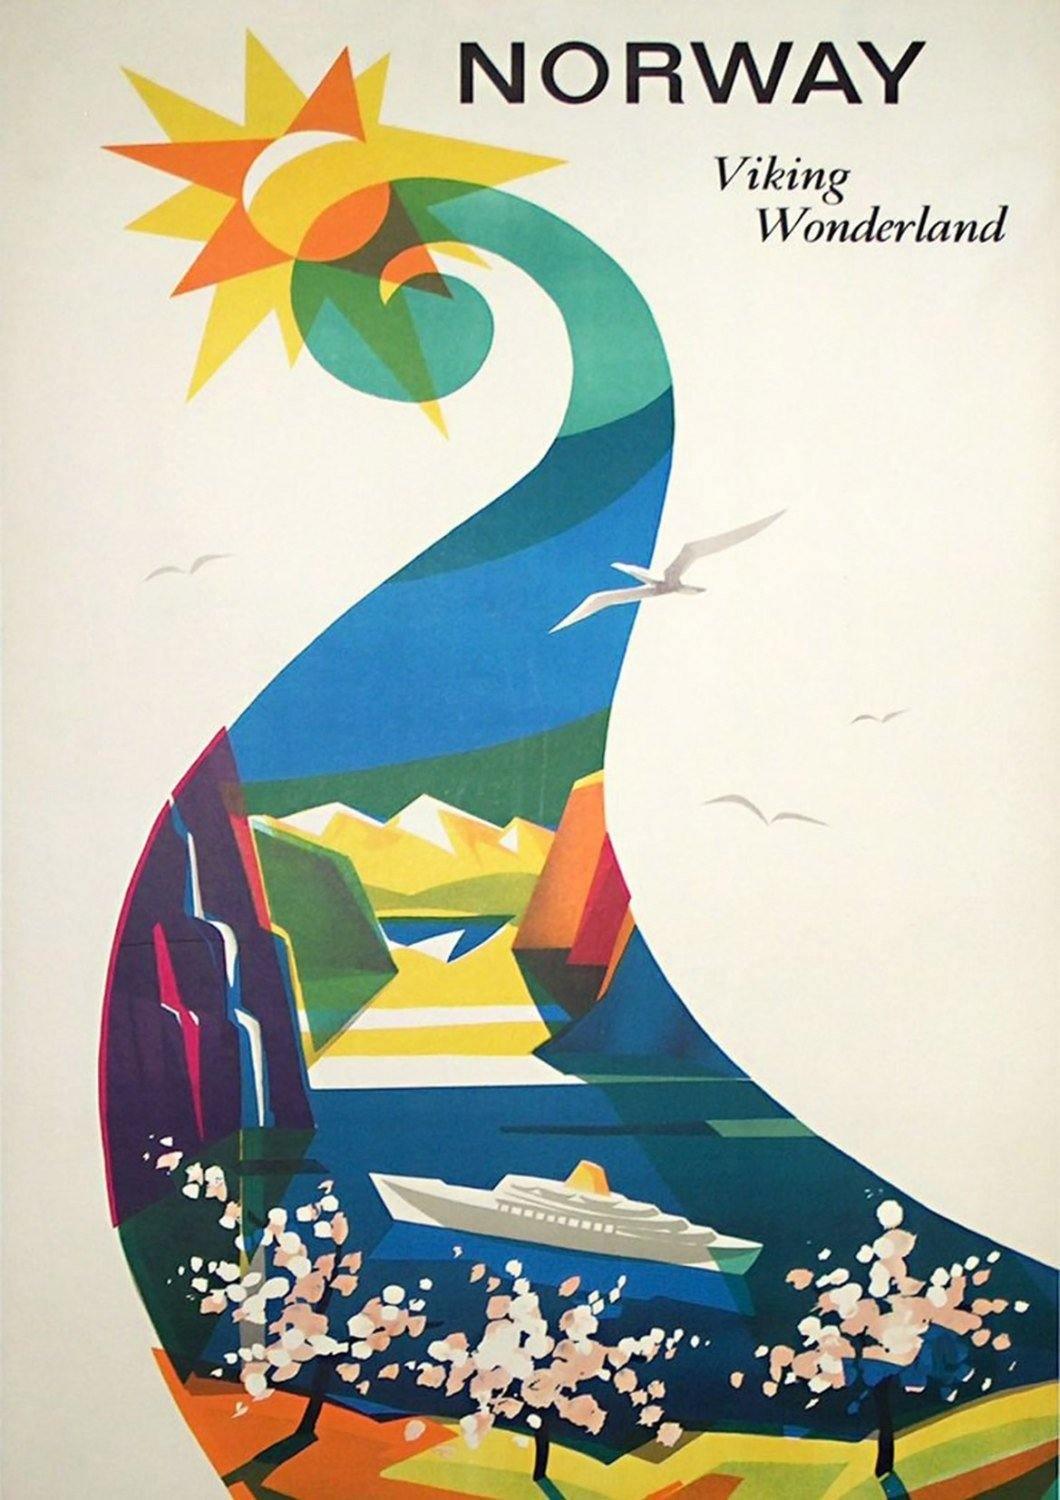 NORWAY TRAVEL POSTER: Vintage Norwegian Viking Advert - Pimlico Prints